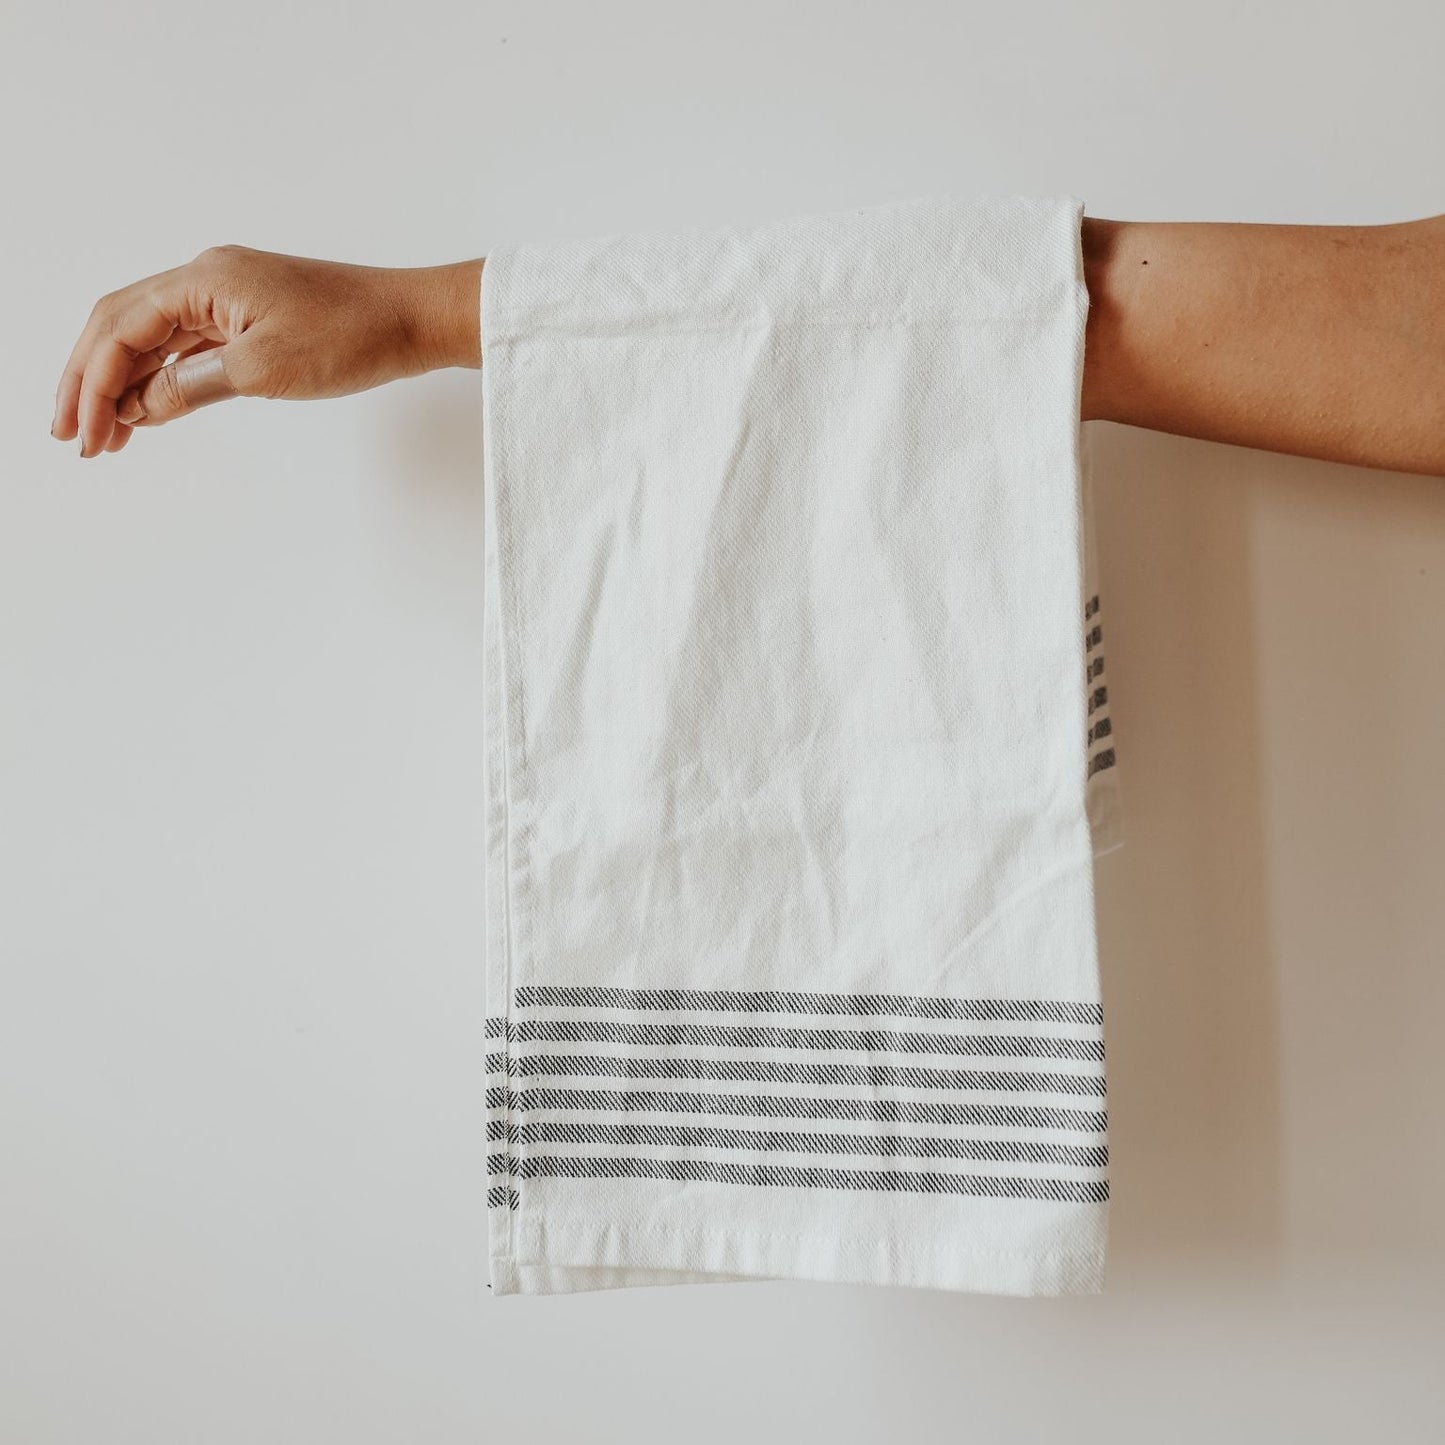 Striped Tea Towel - Six Stripes by Sweet Water Decor